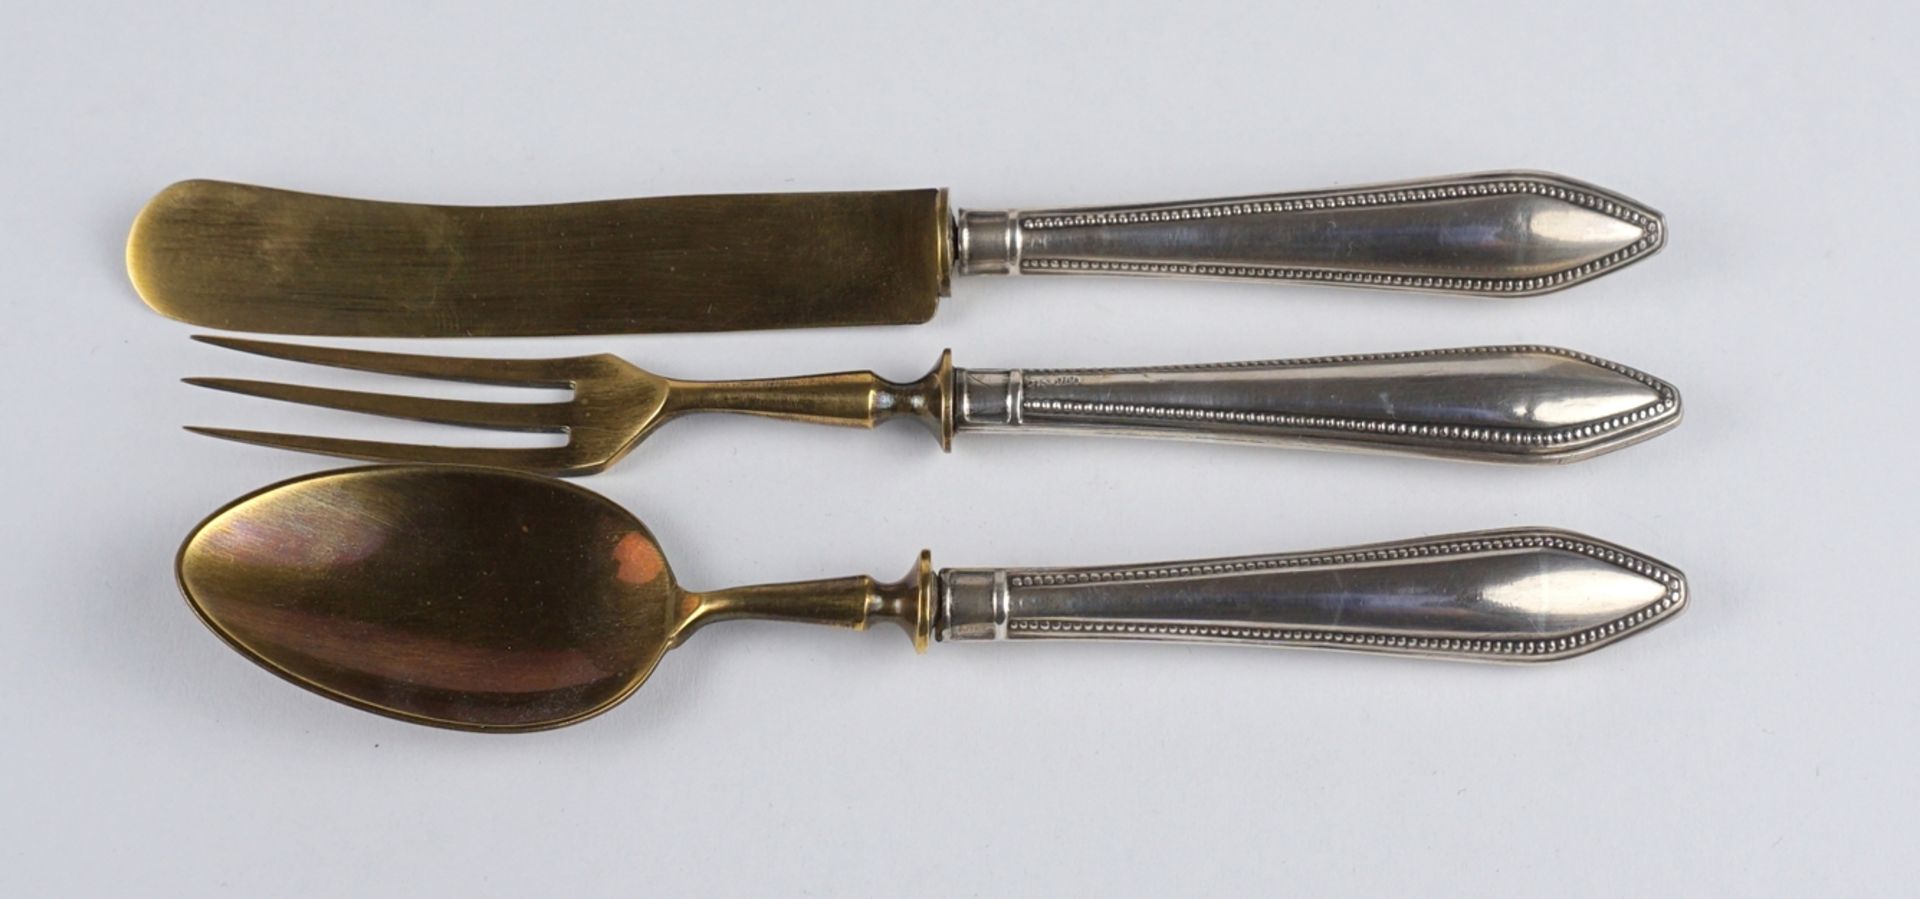 3-piece cutlery set, silver/brass, early 20th c.